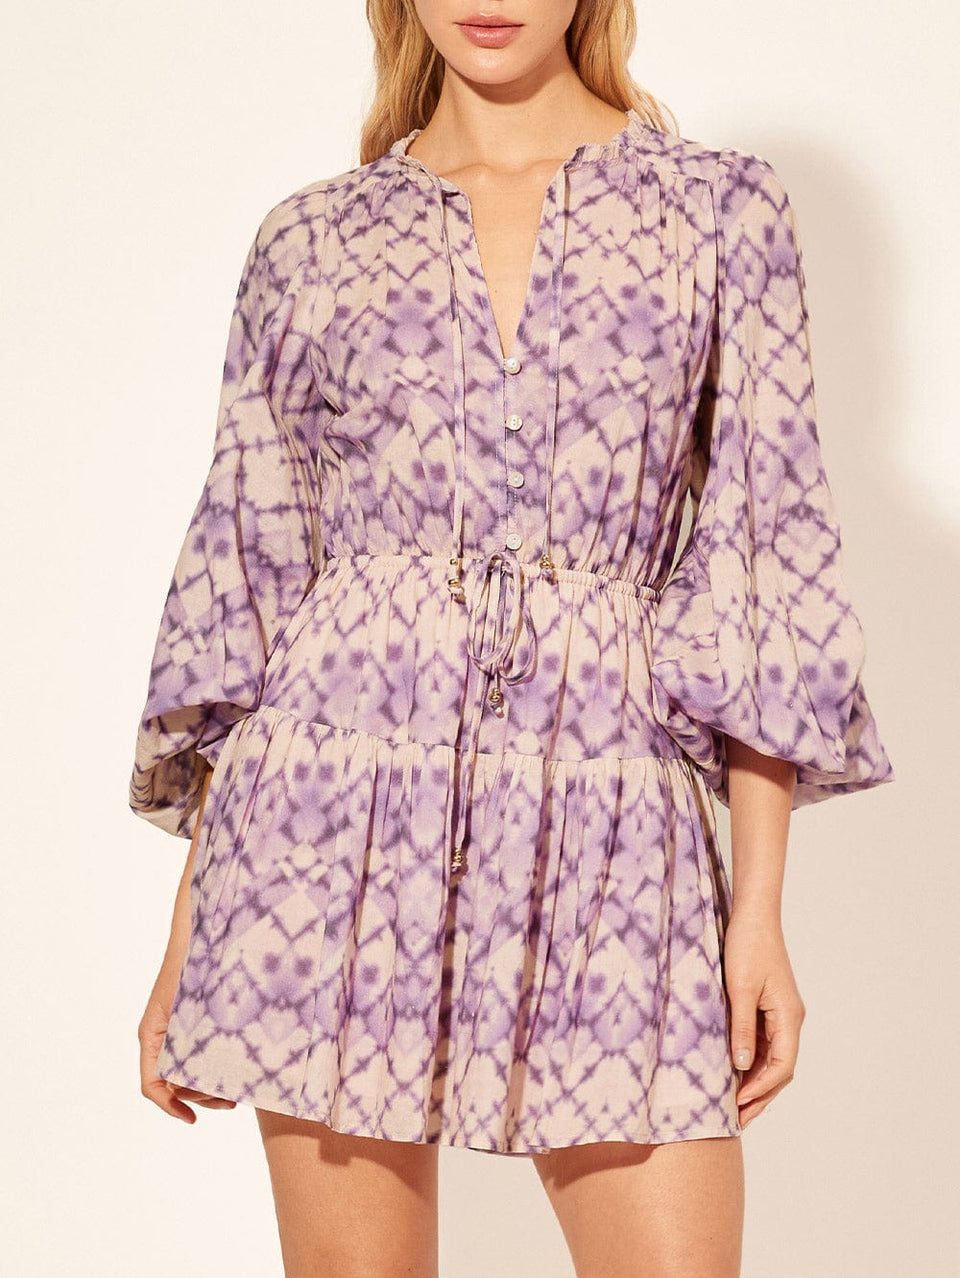 Alice Mini Dress KIVARI | Model wears purple tie dye mini dress close up